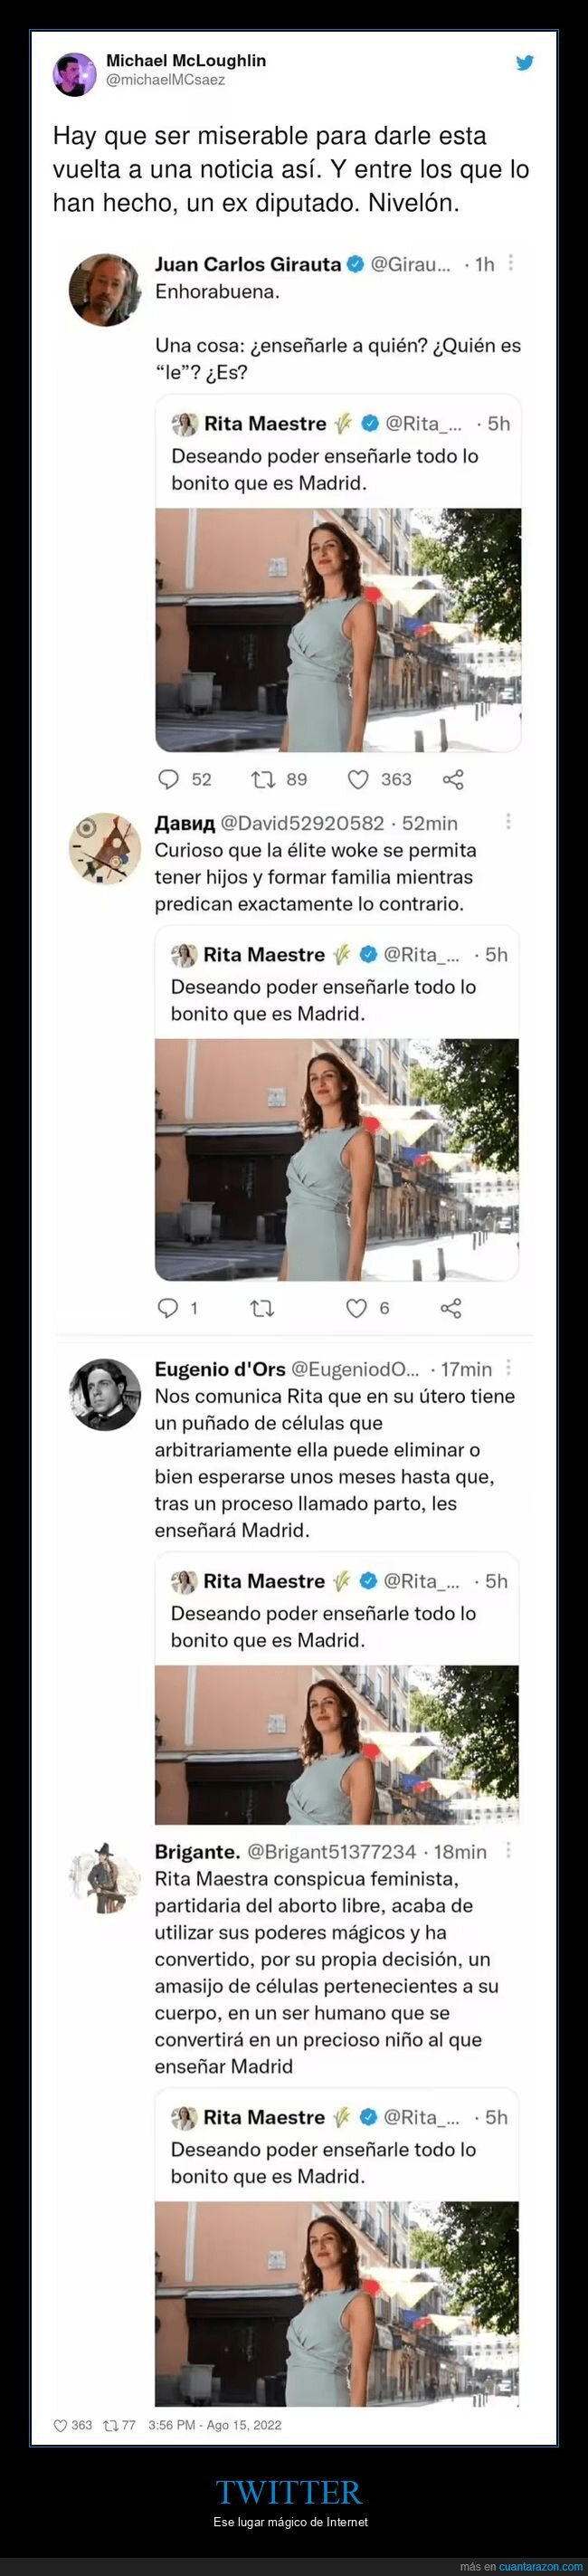 Twitter,política,España,rita maestre